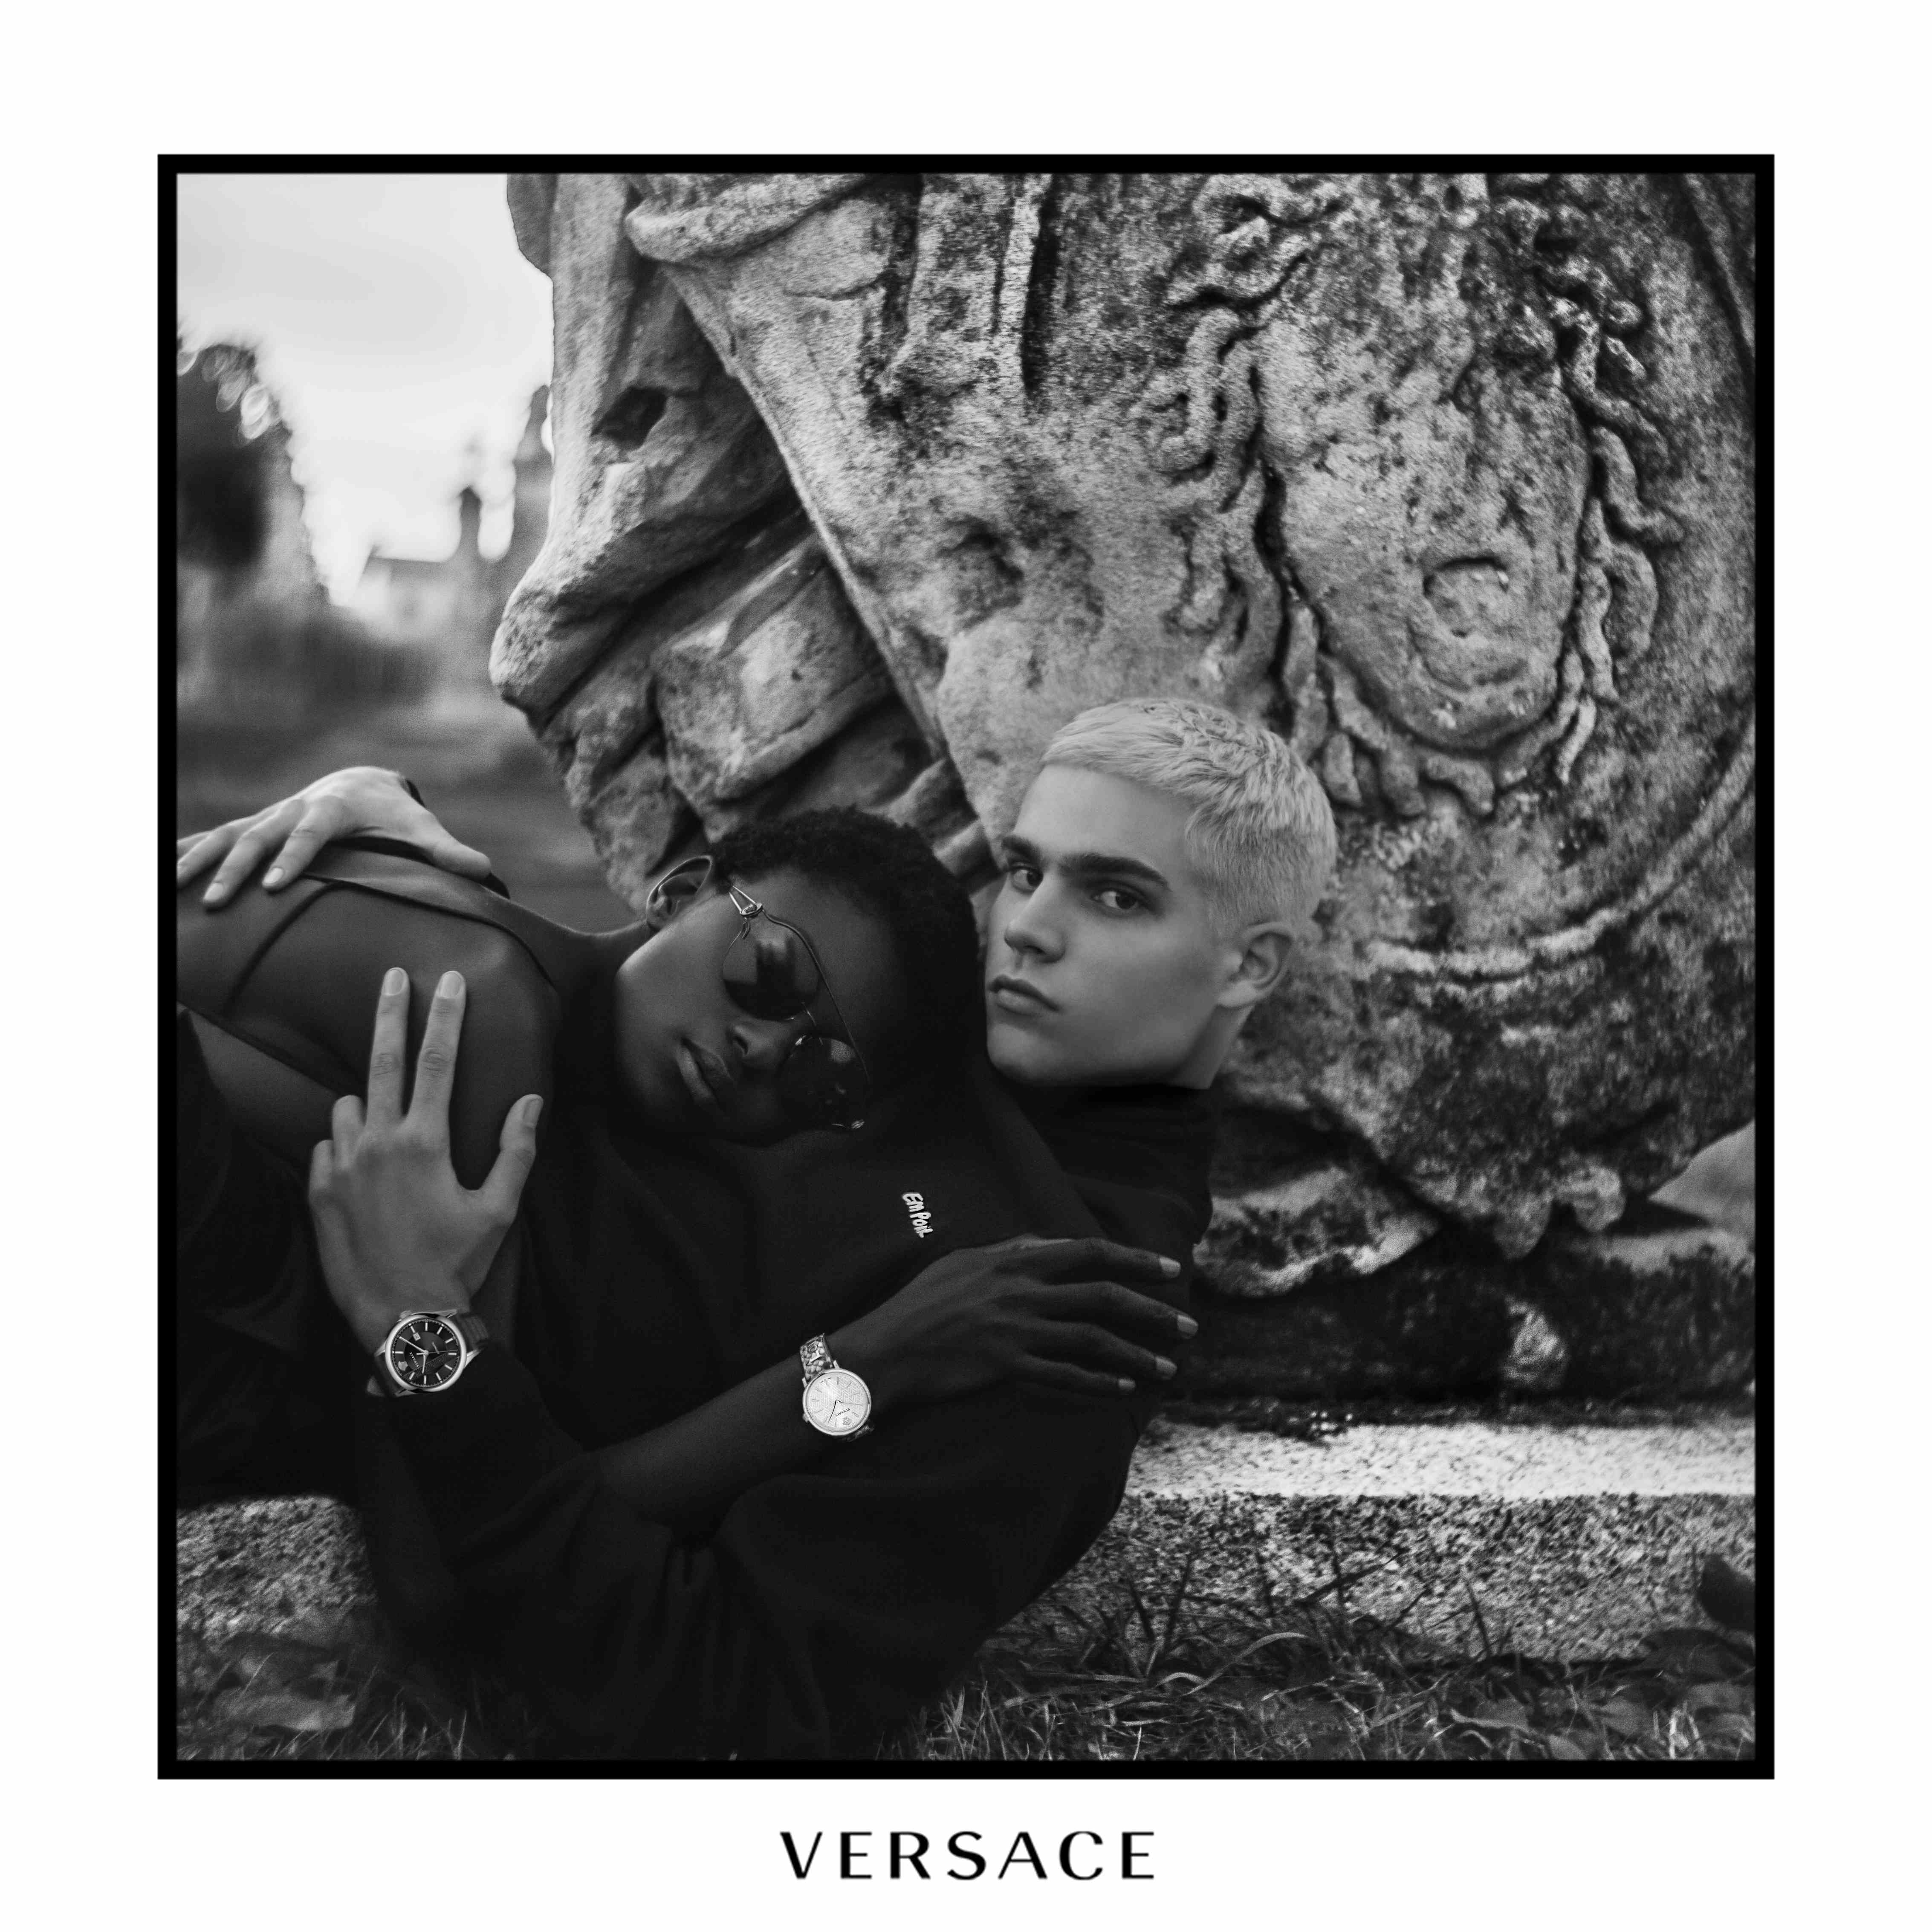 VERSACE - Versace Manifesto
Photographer: Luca Finotti
Location: Belgioioso, Italy